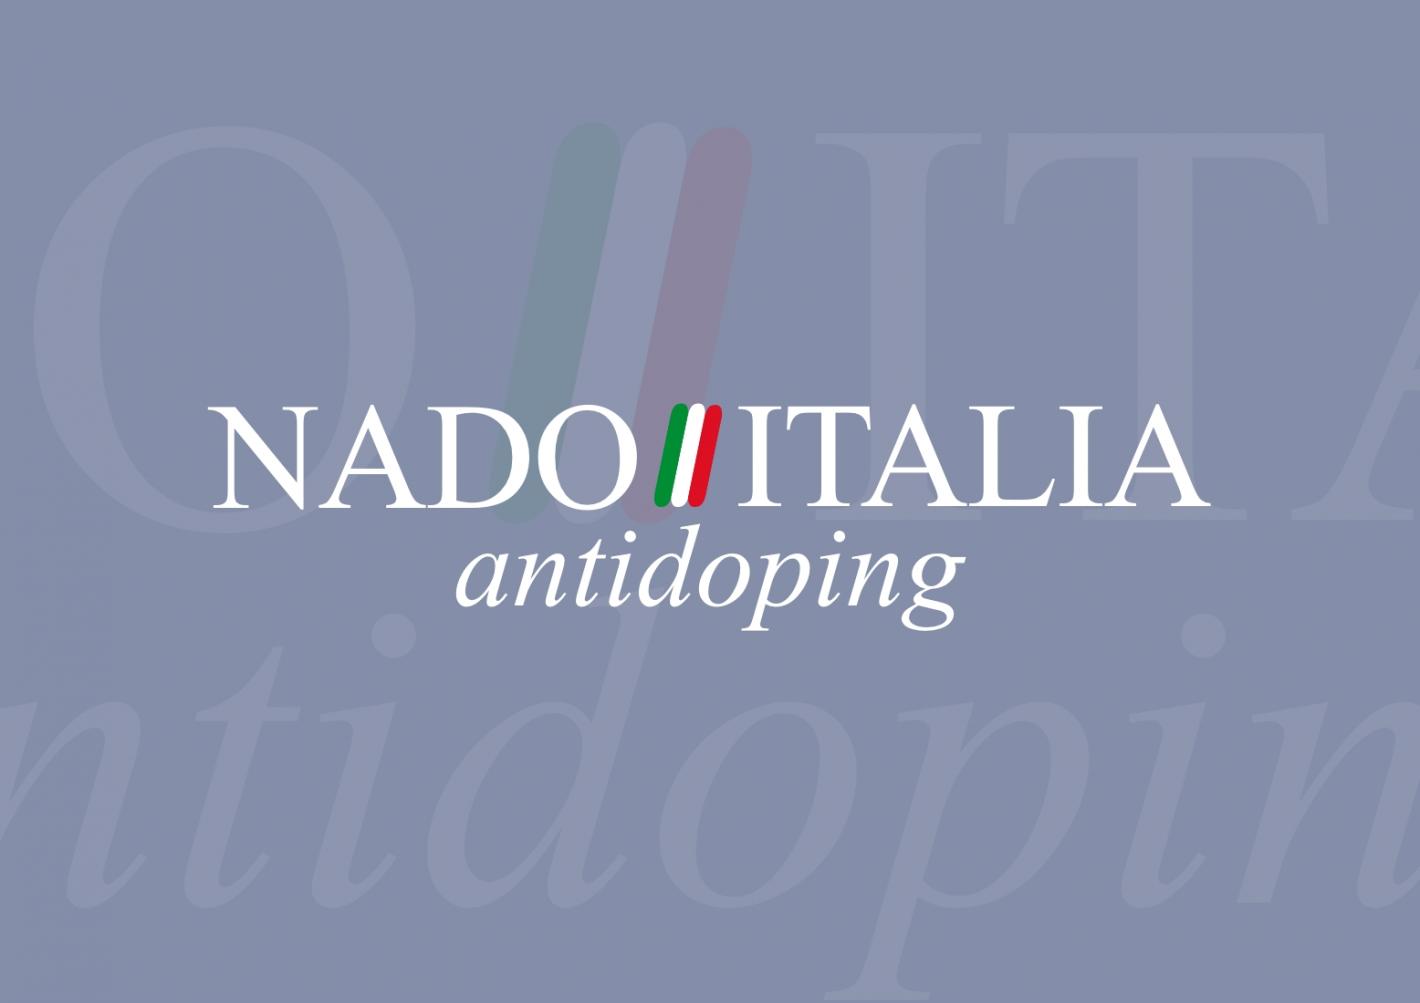 images/2023/varie/antidoping/Squalifiche/medium/logo_nado_italia.jpg